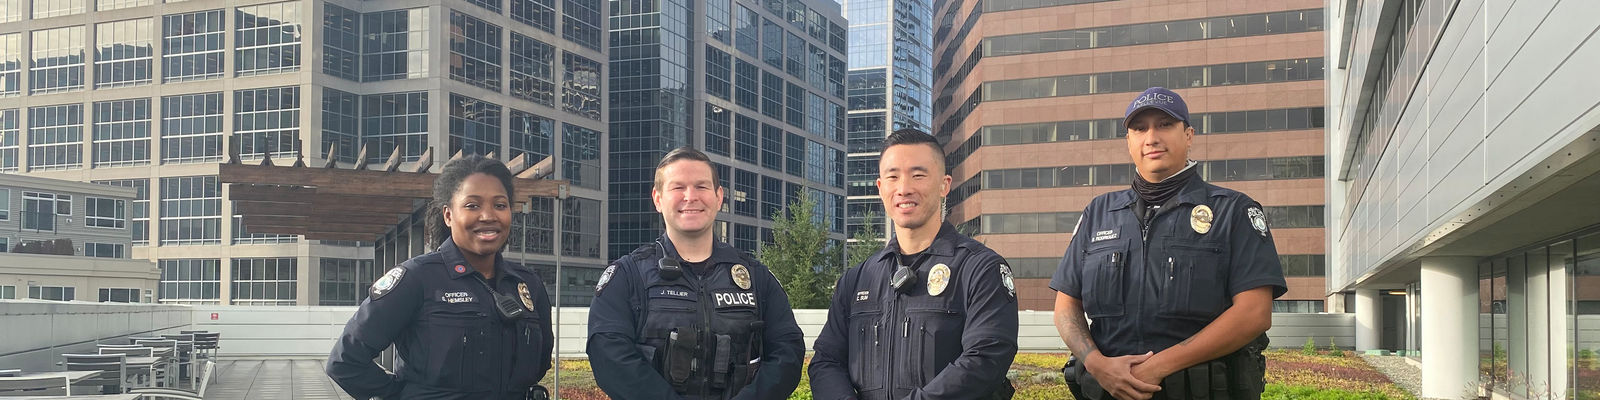 Bellevue police officers